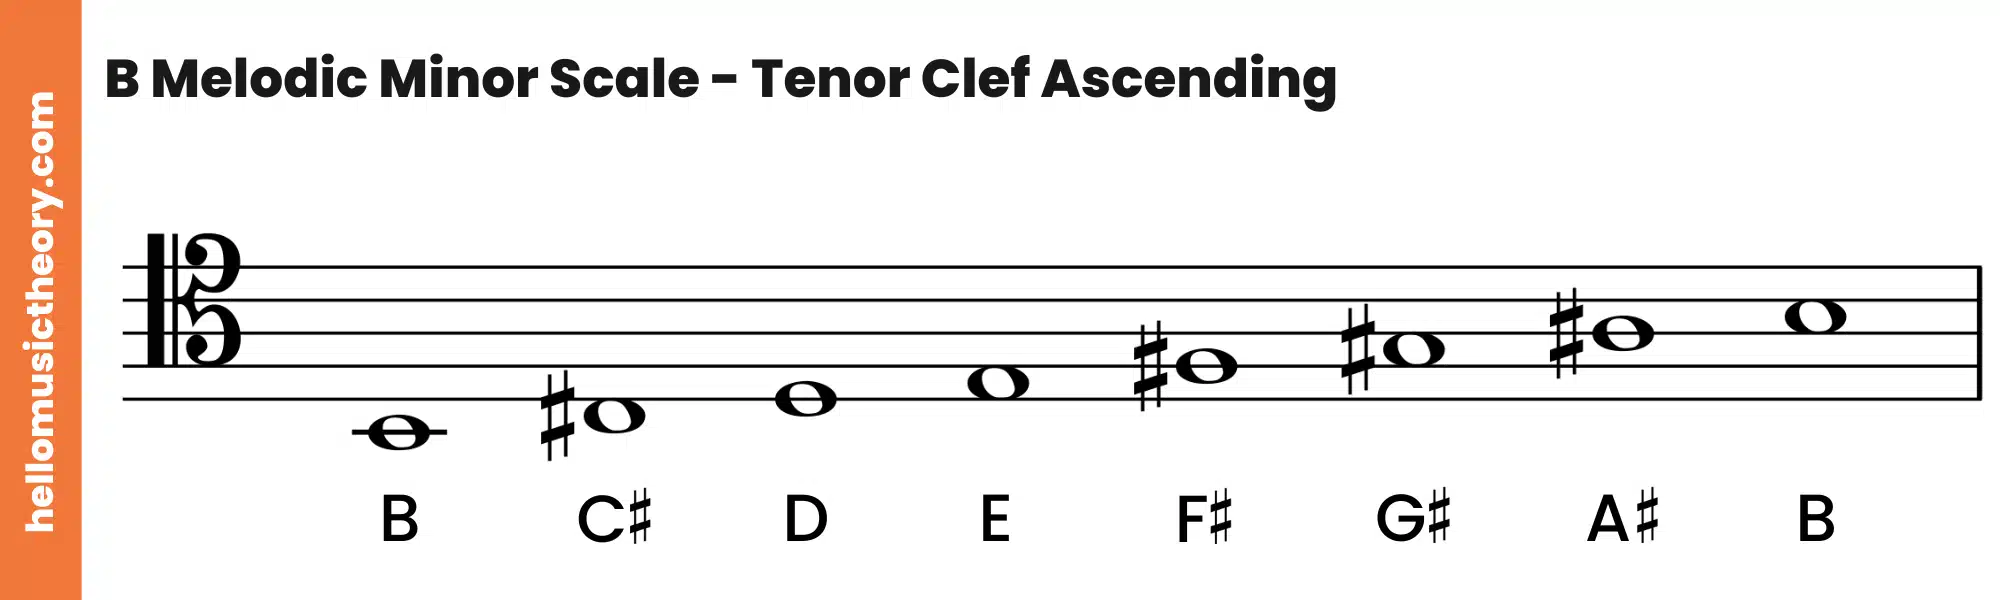 B Melodic Minor Scale Tenor Clef Ascending